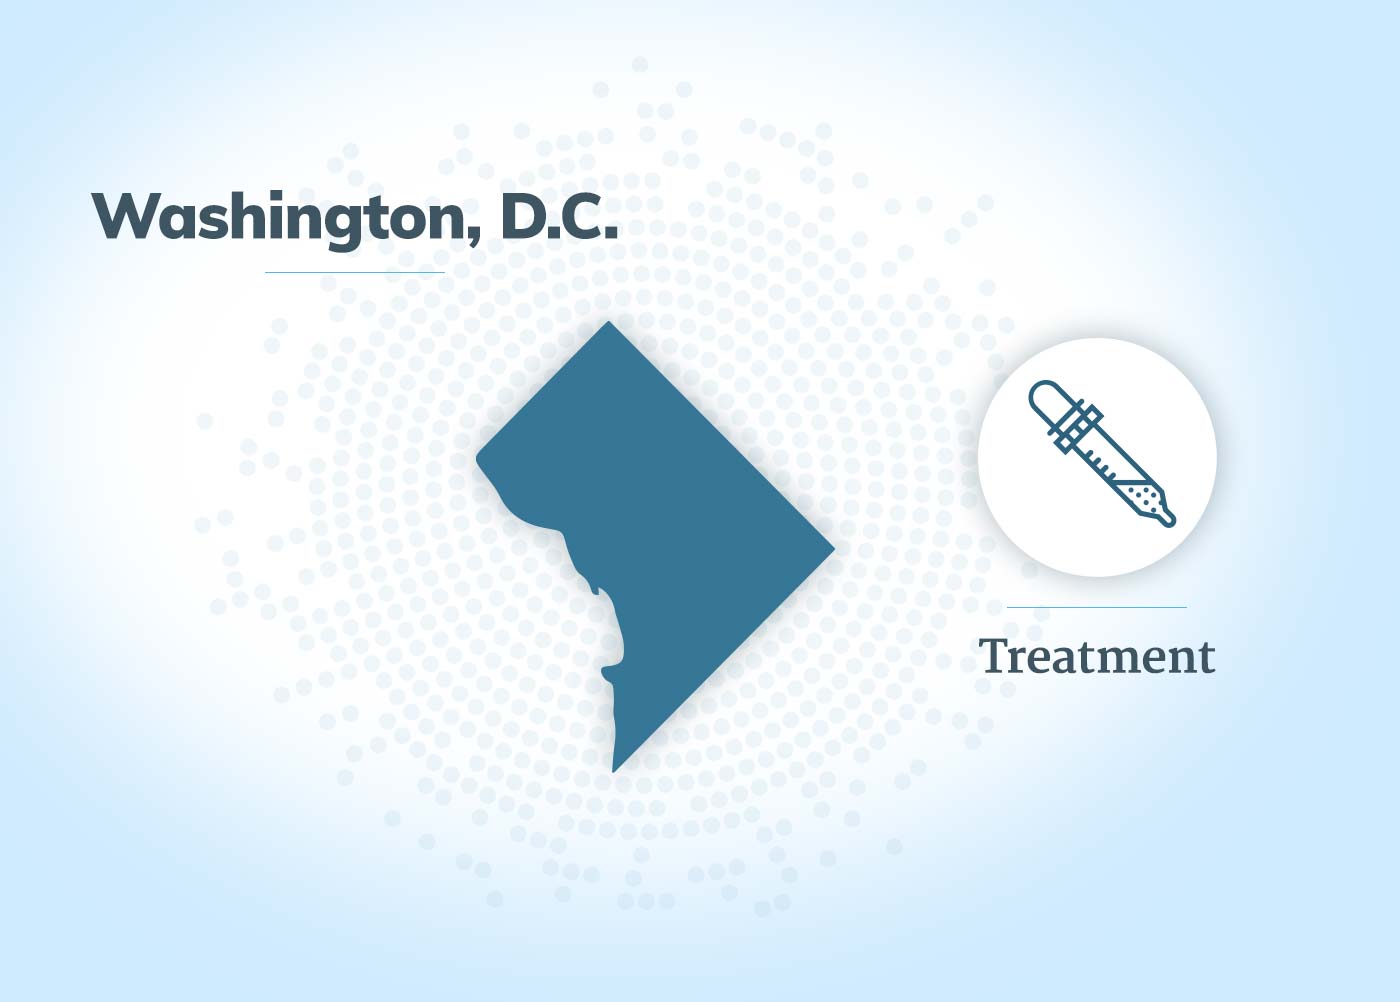 Mesothelioma treatment in Washington, D.C.